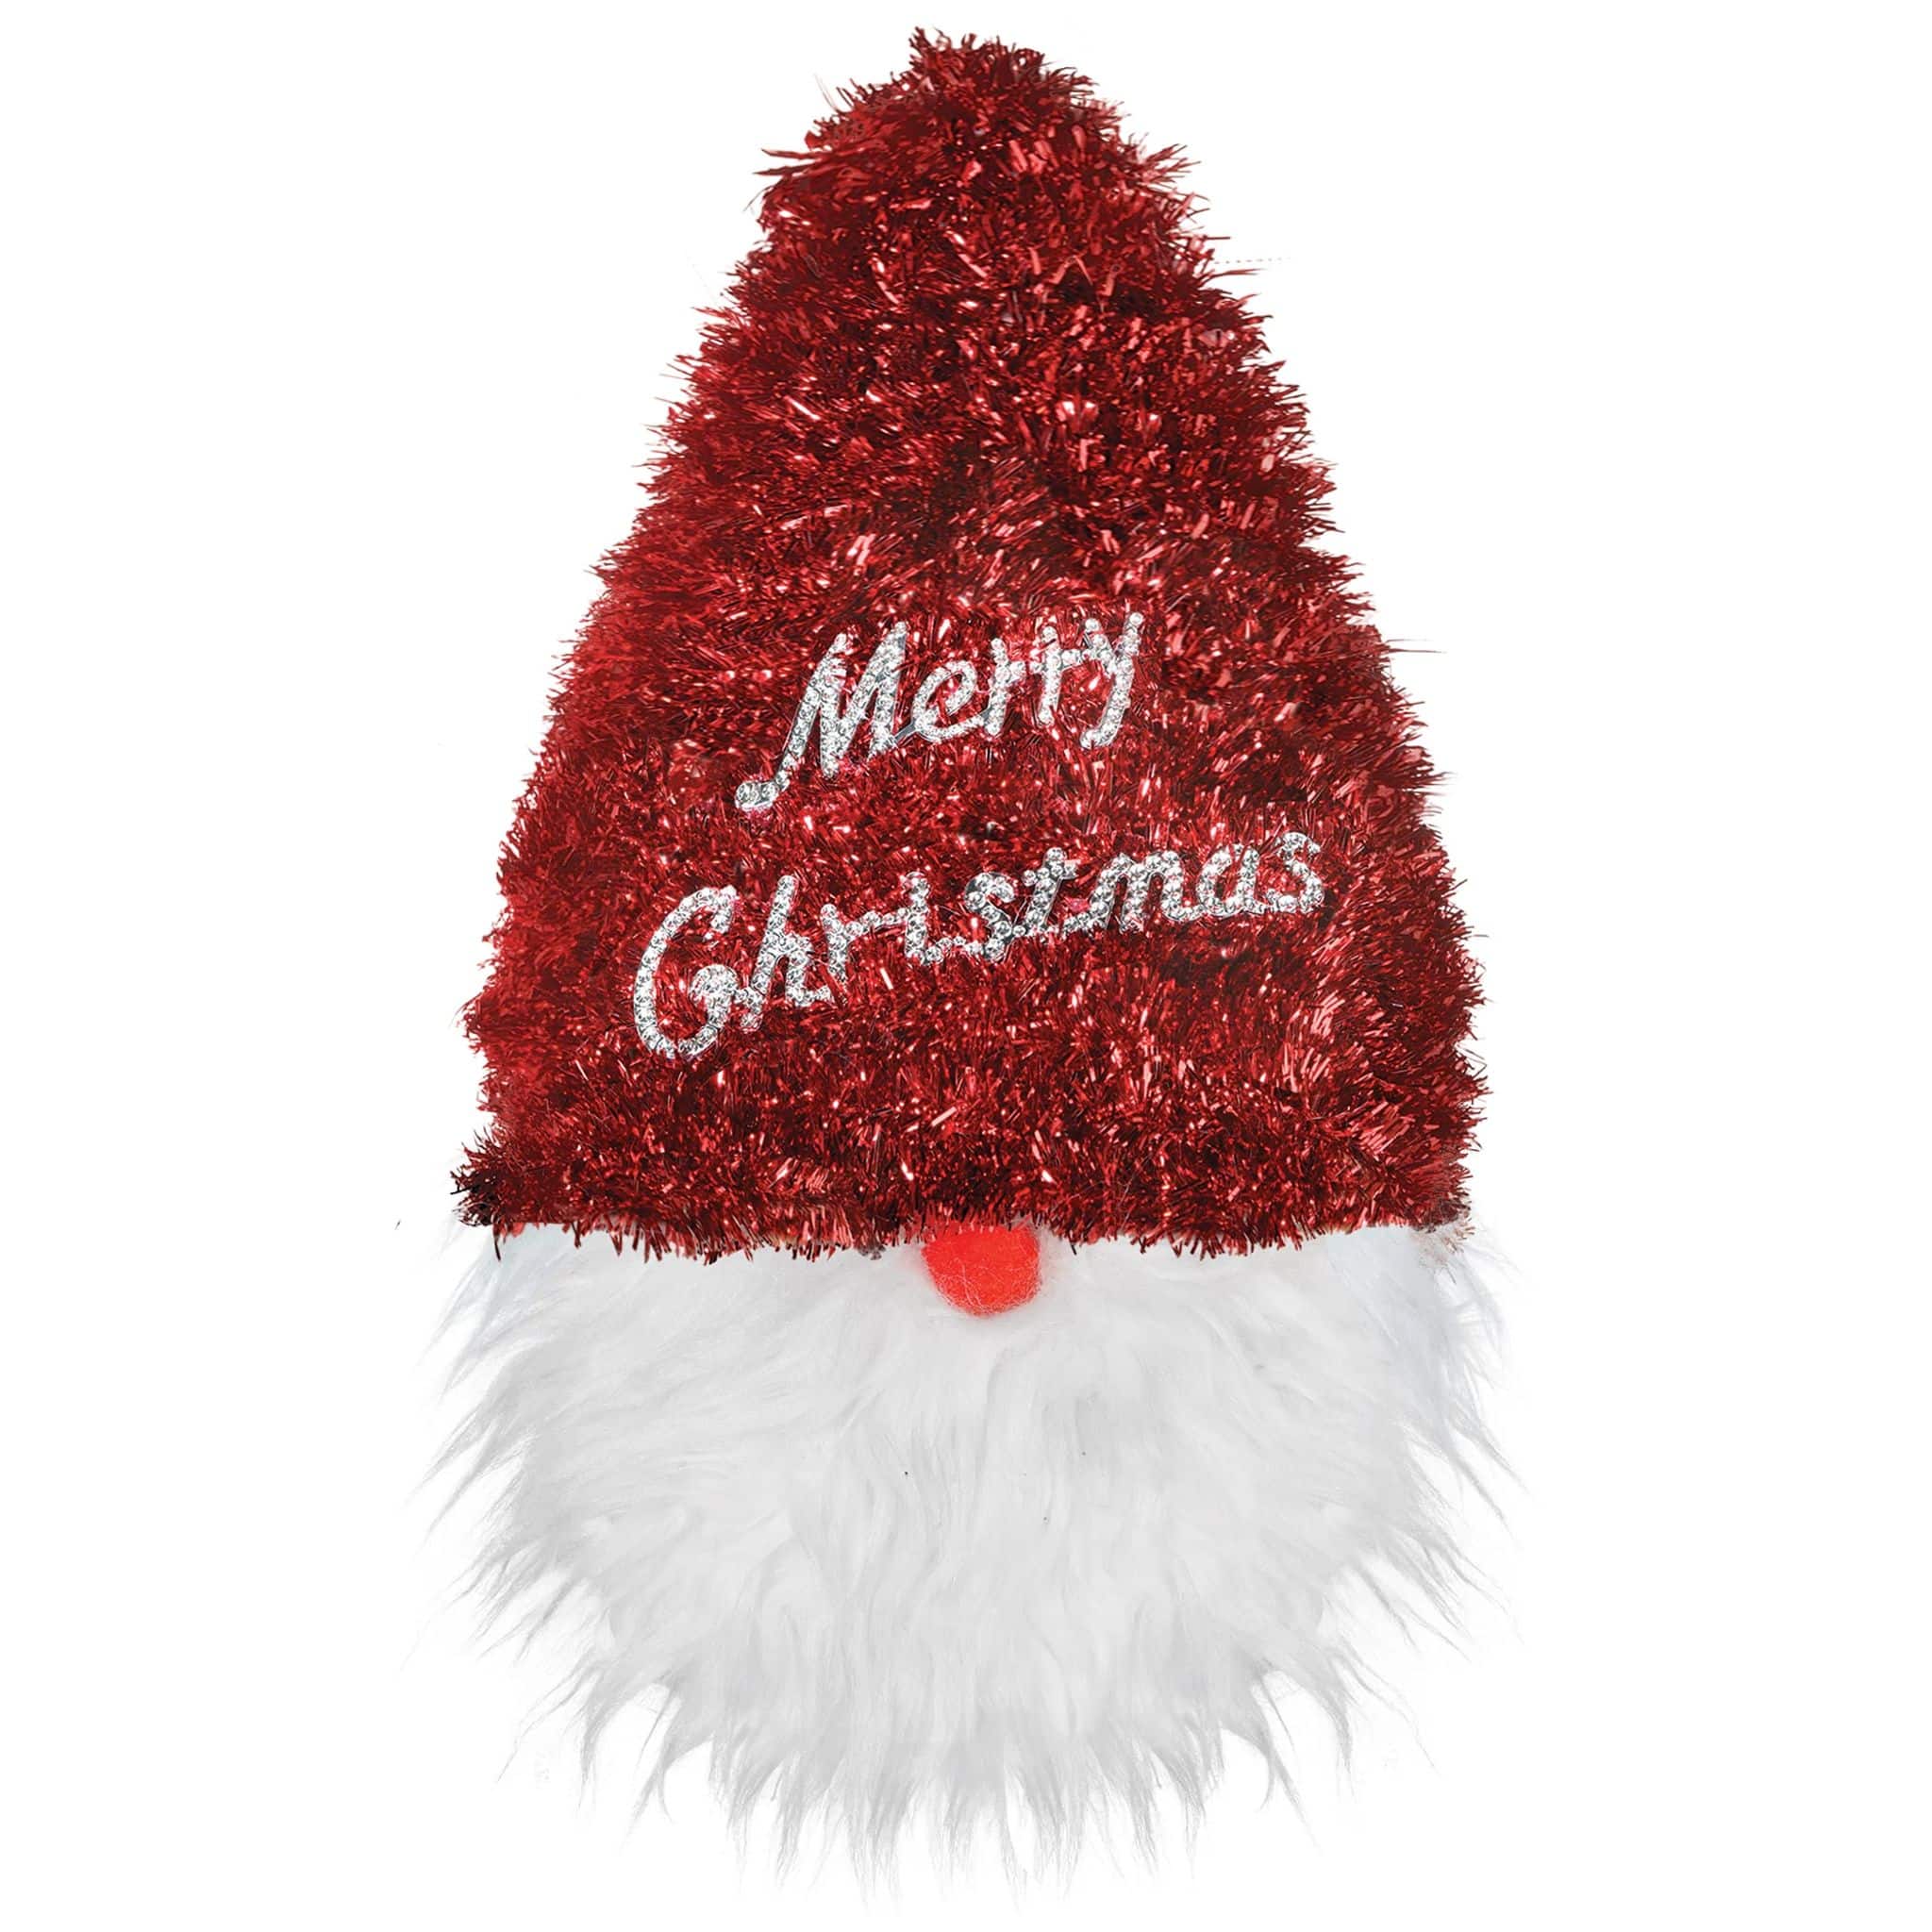 3D Deluxe Tinsel Christmas Santa Gnome